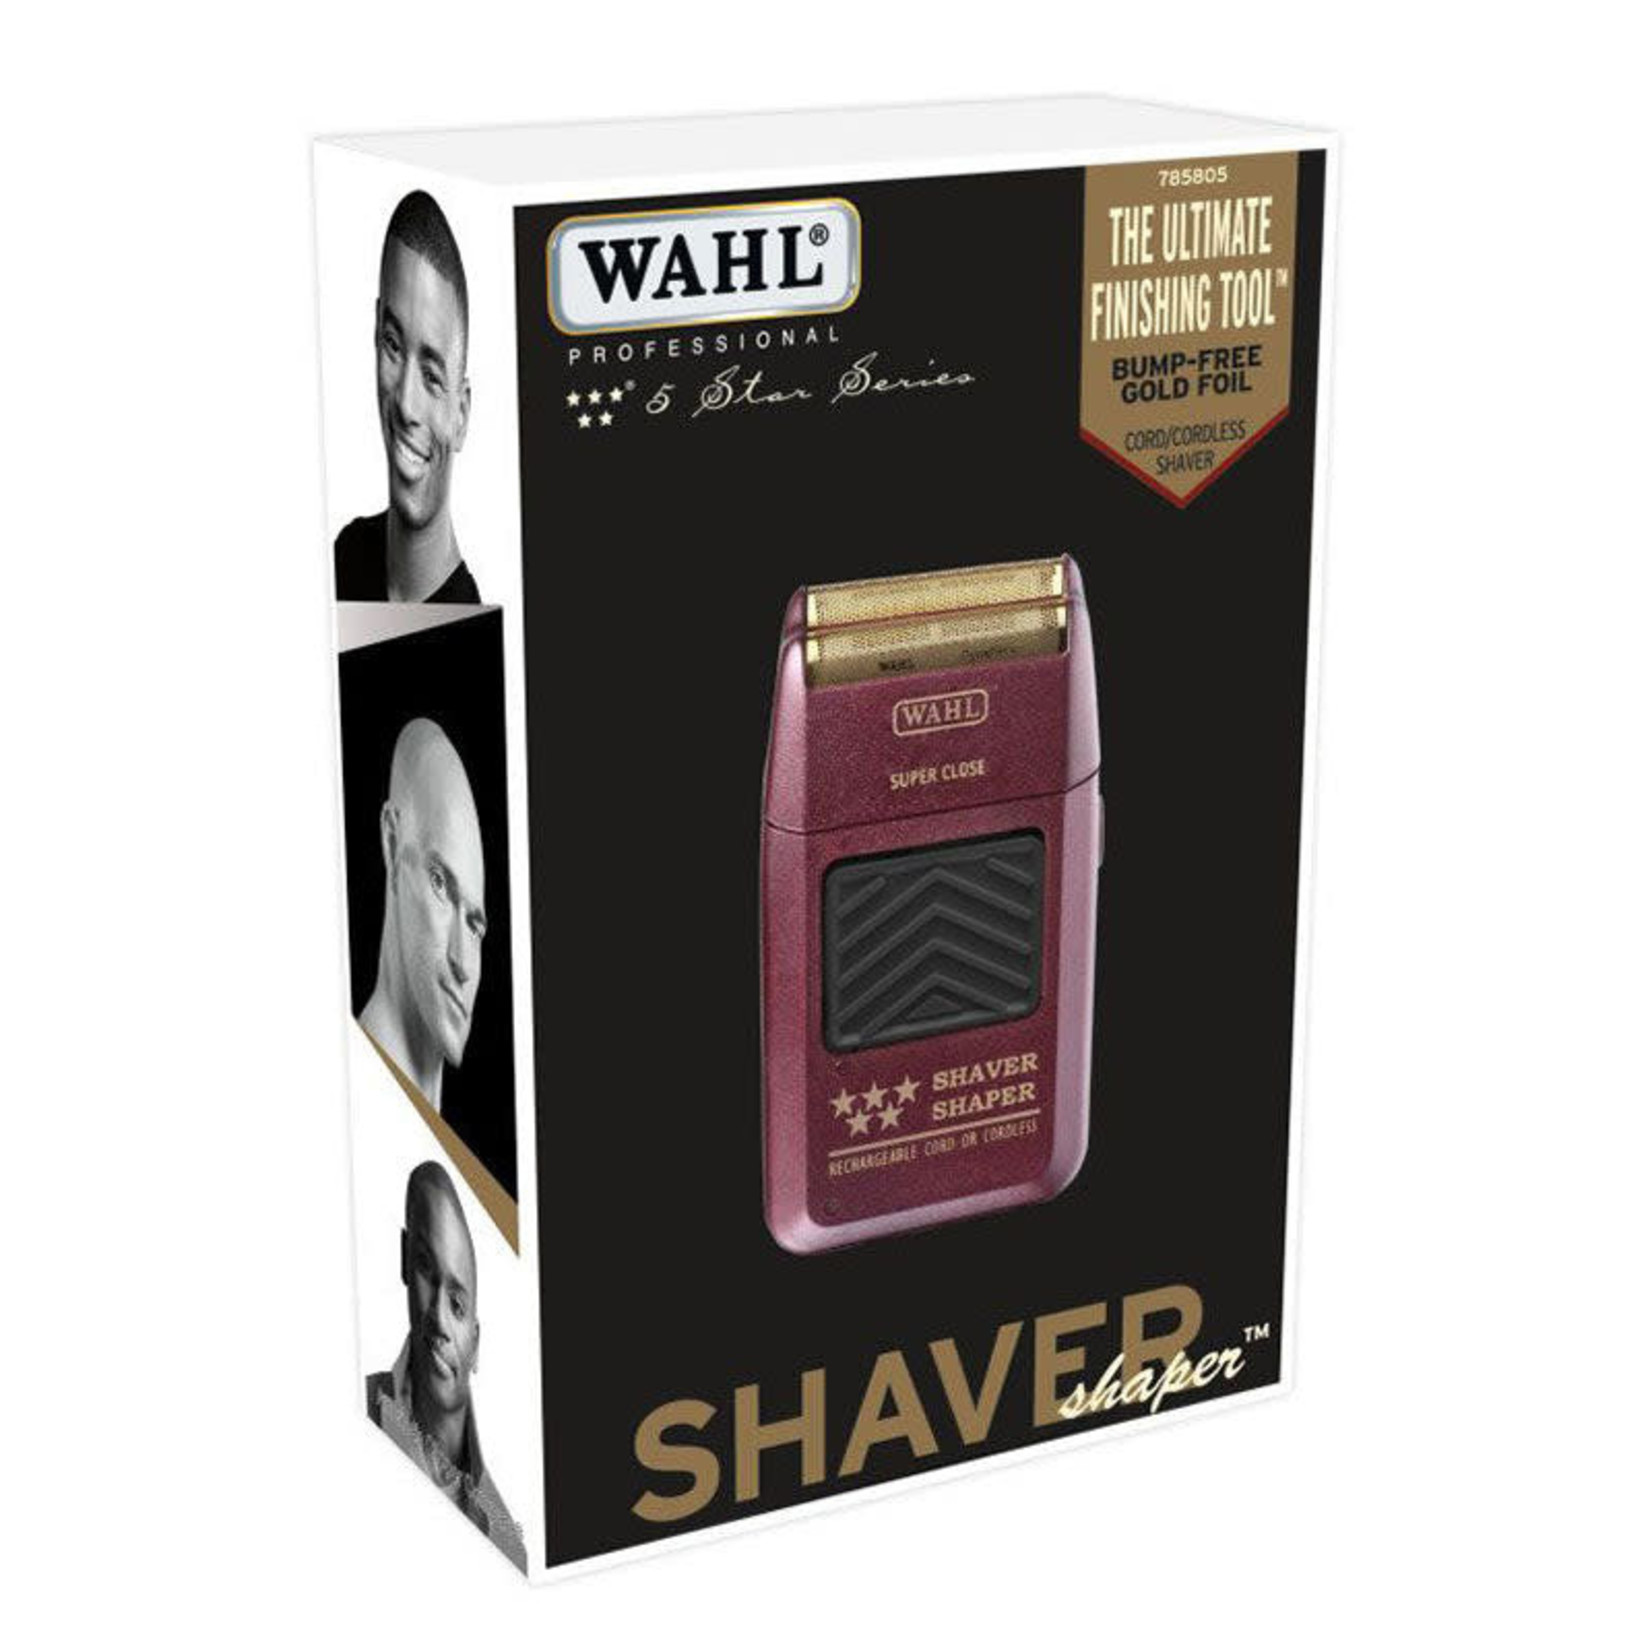 WAHL 5 Star rasoir "Shaver Shaper" avec/sans corde